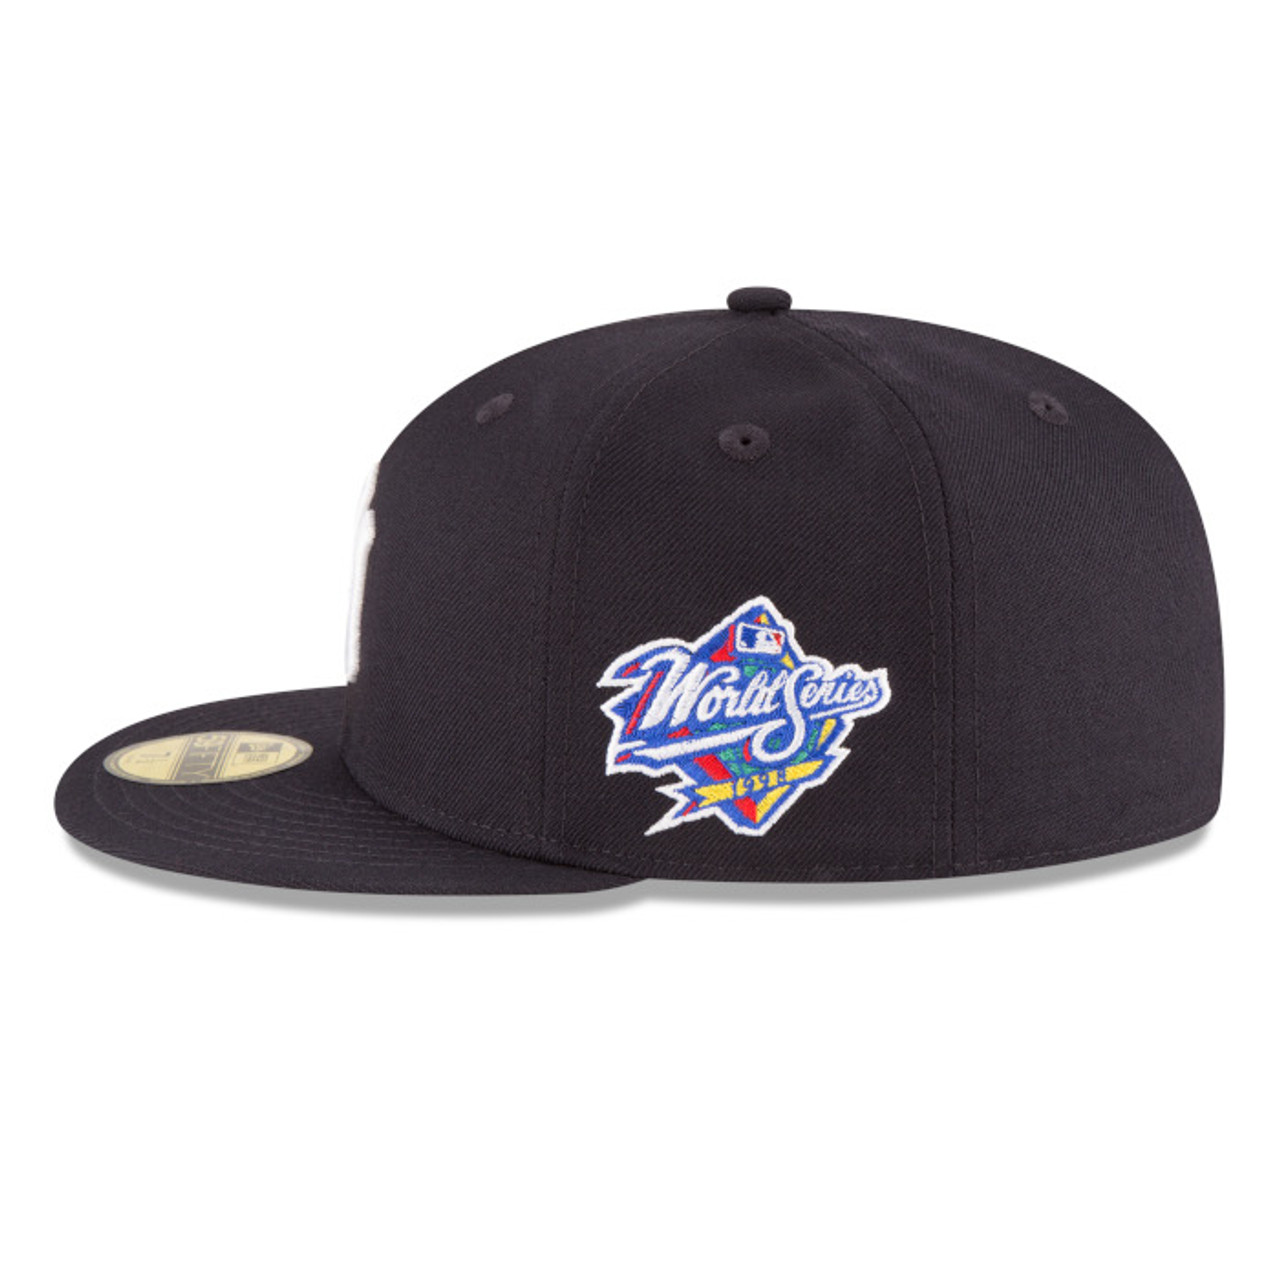 New Era Snap Back 1998 World Series Champions NY Yankees Hat 